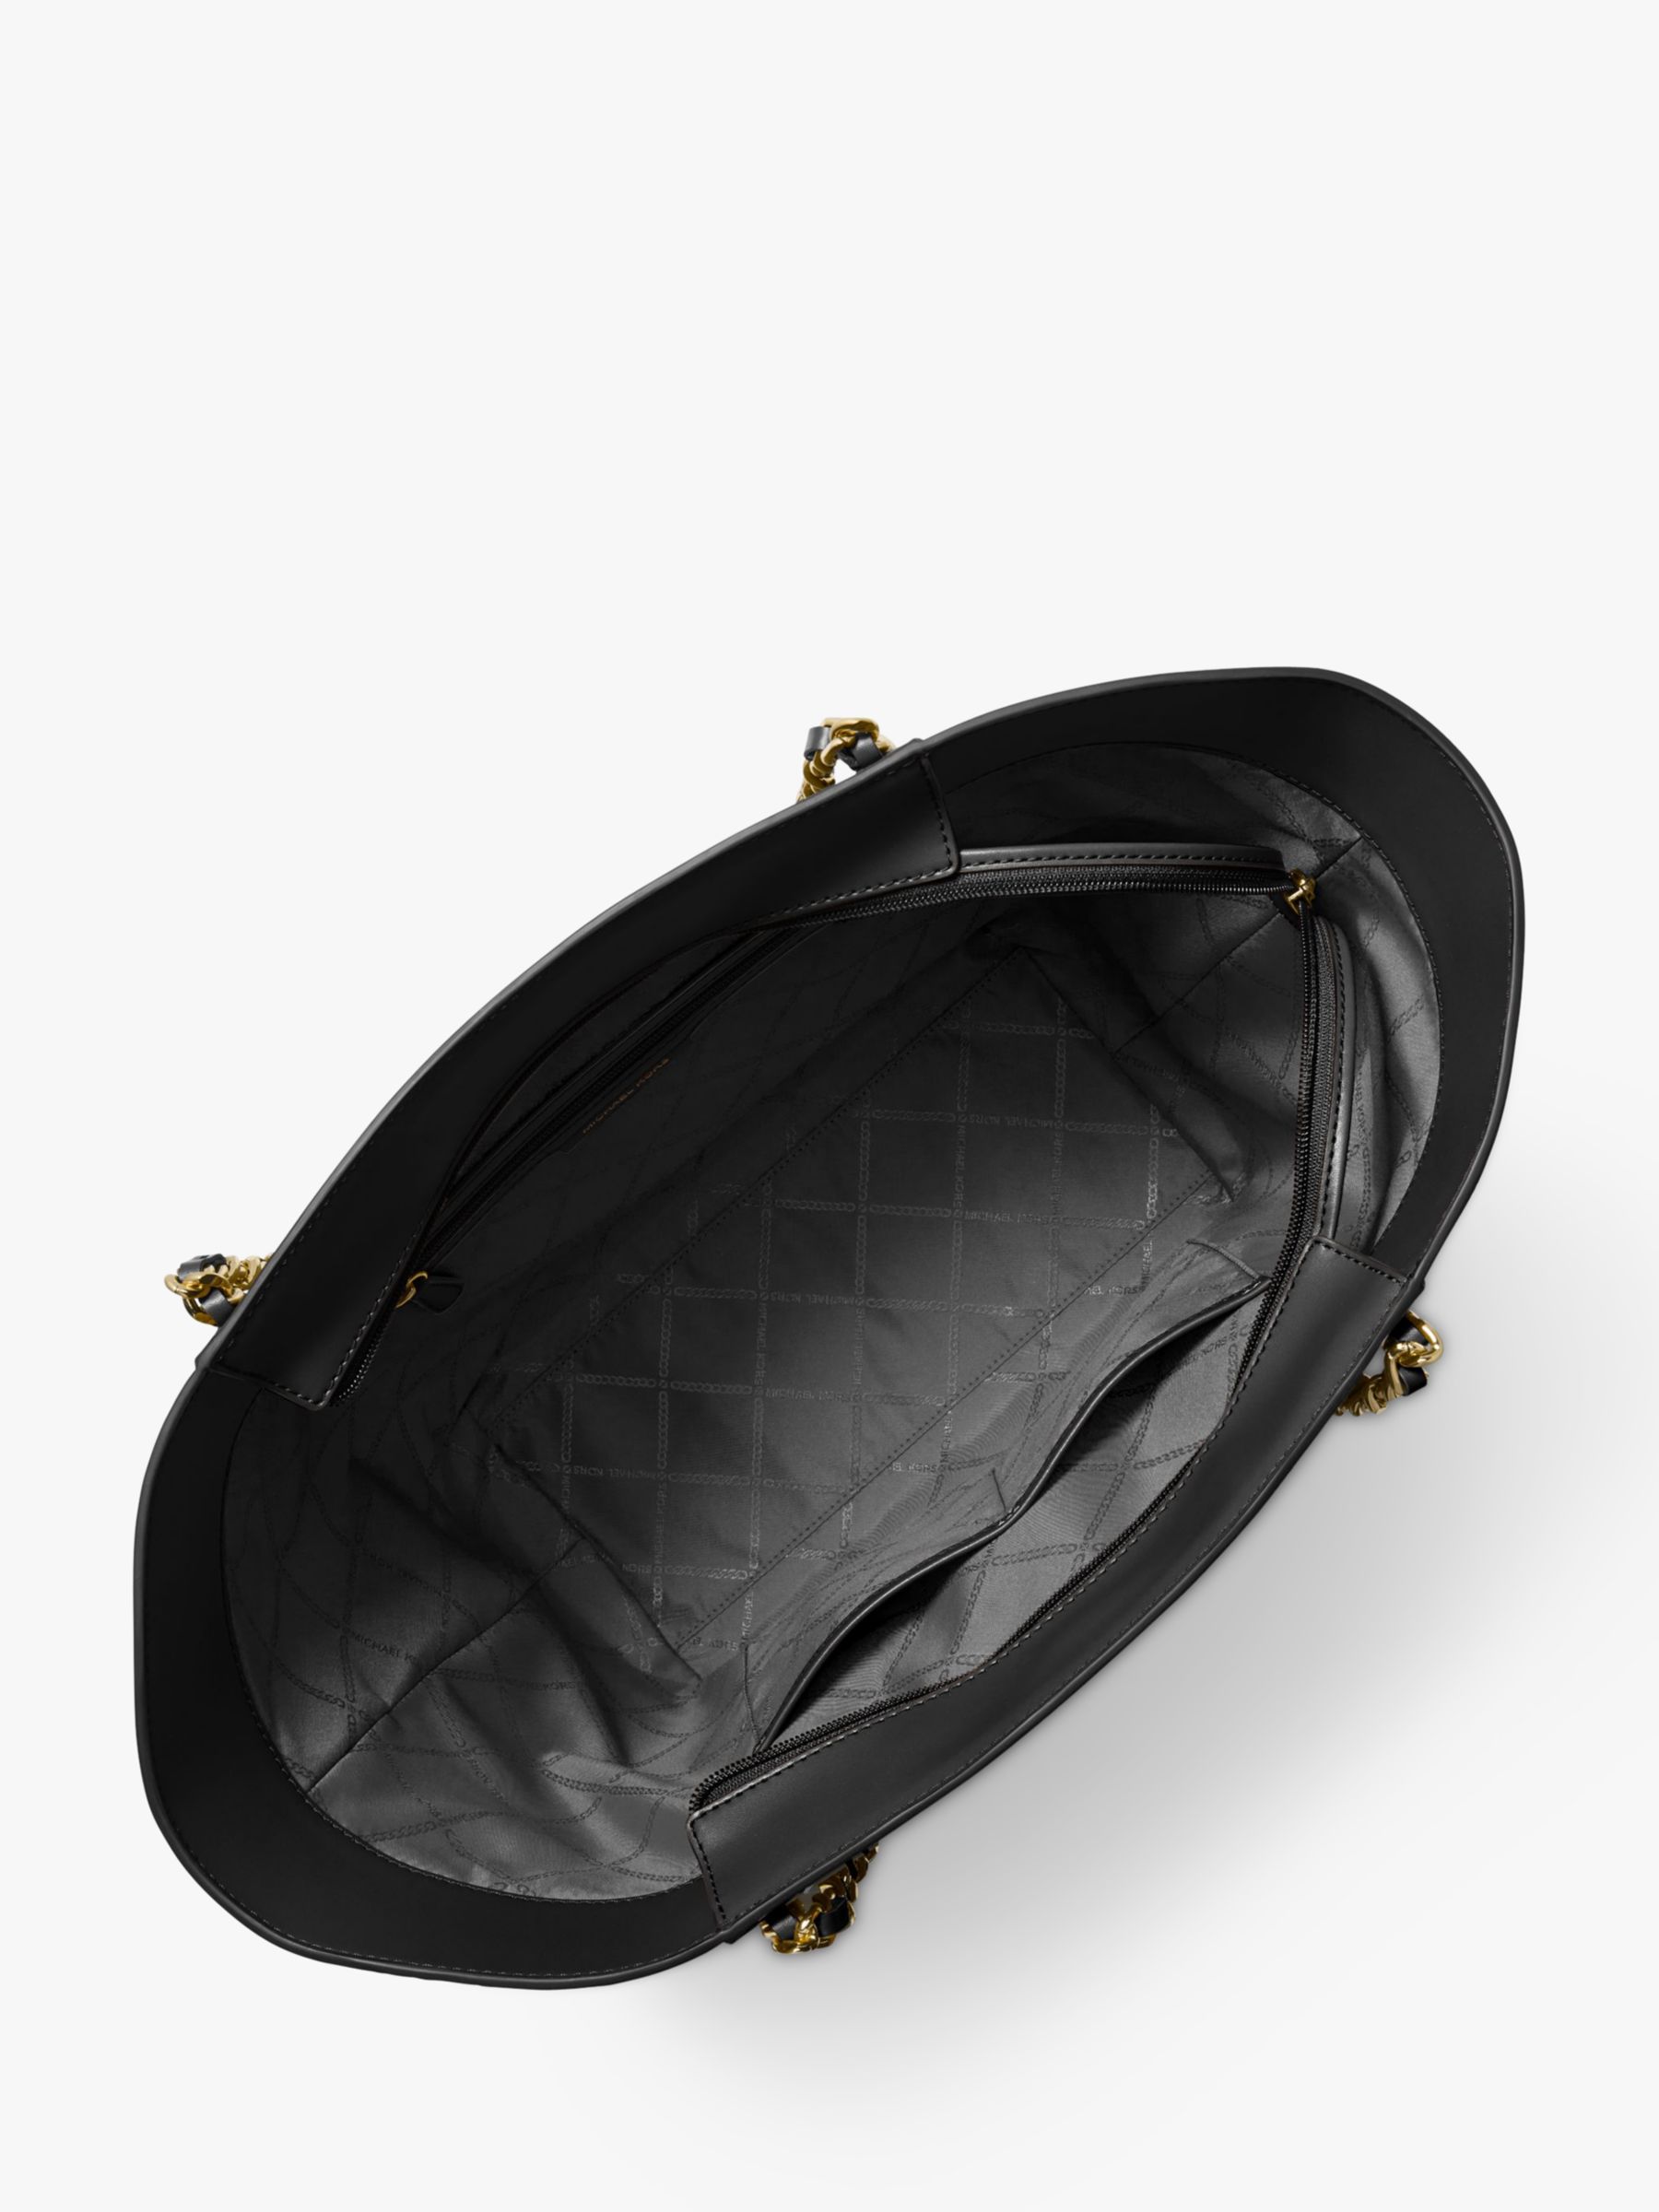 Buy Michael Kors Westley Large Pebbled Leather Chain-Link Tote Bag, Black Online at johnlewis.com